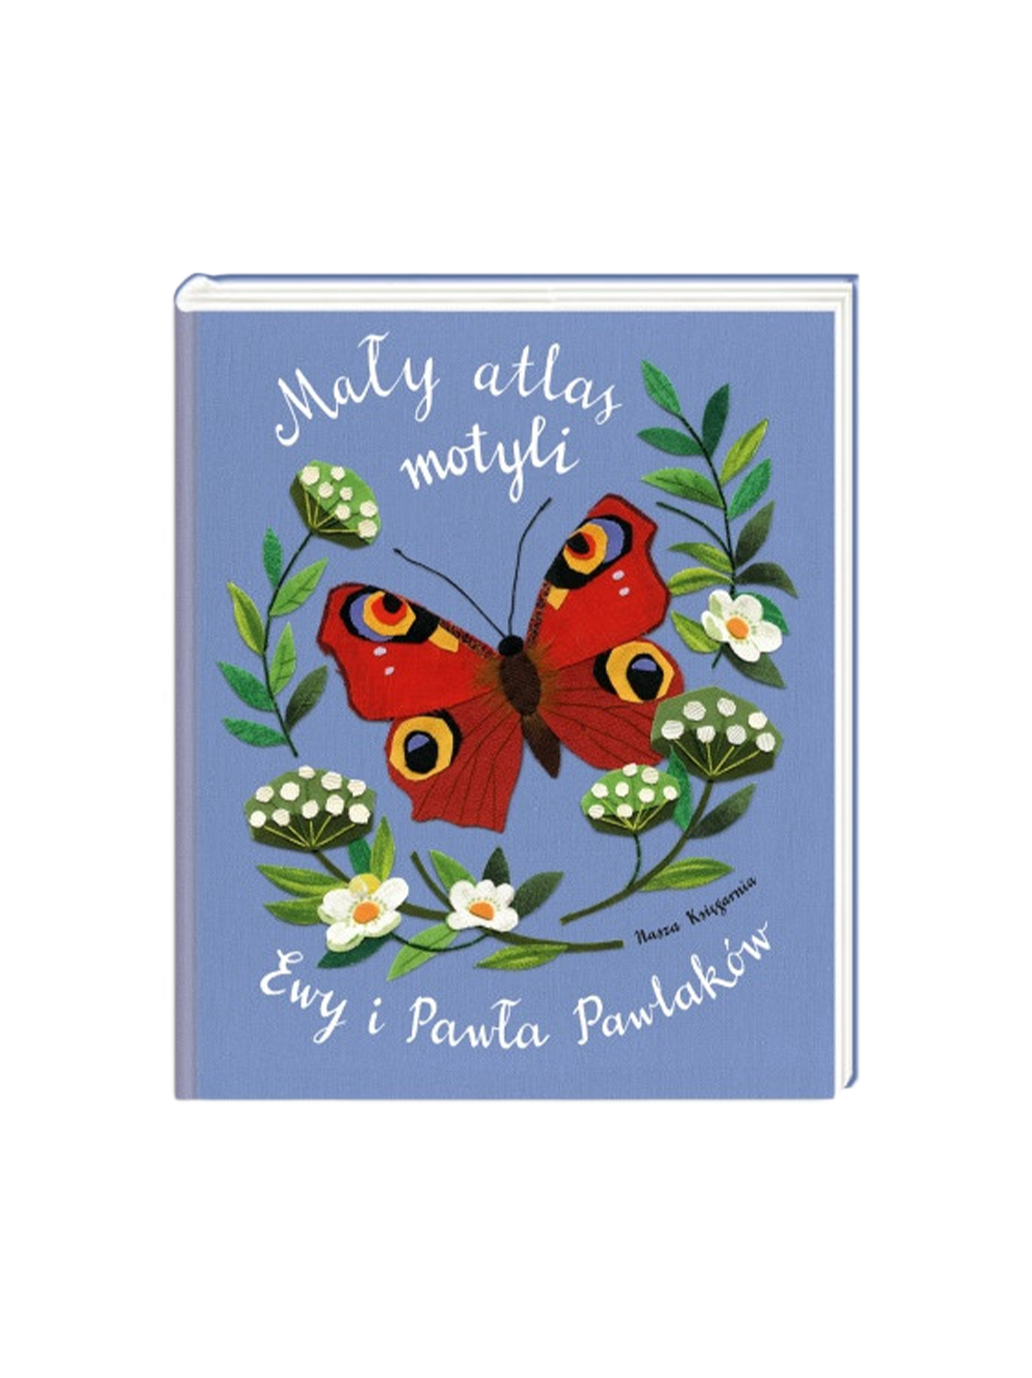 Little Atlas of Butterflies by Ewa and Paweł Pawlak